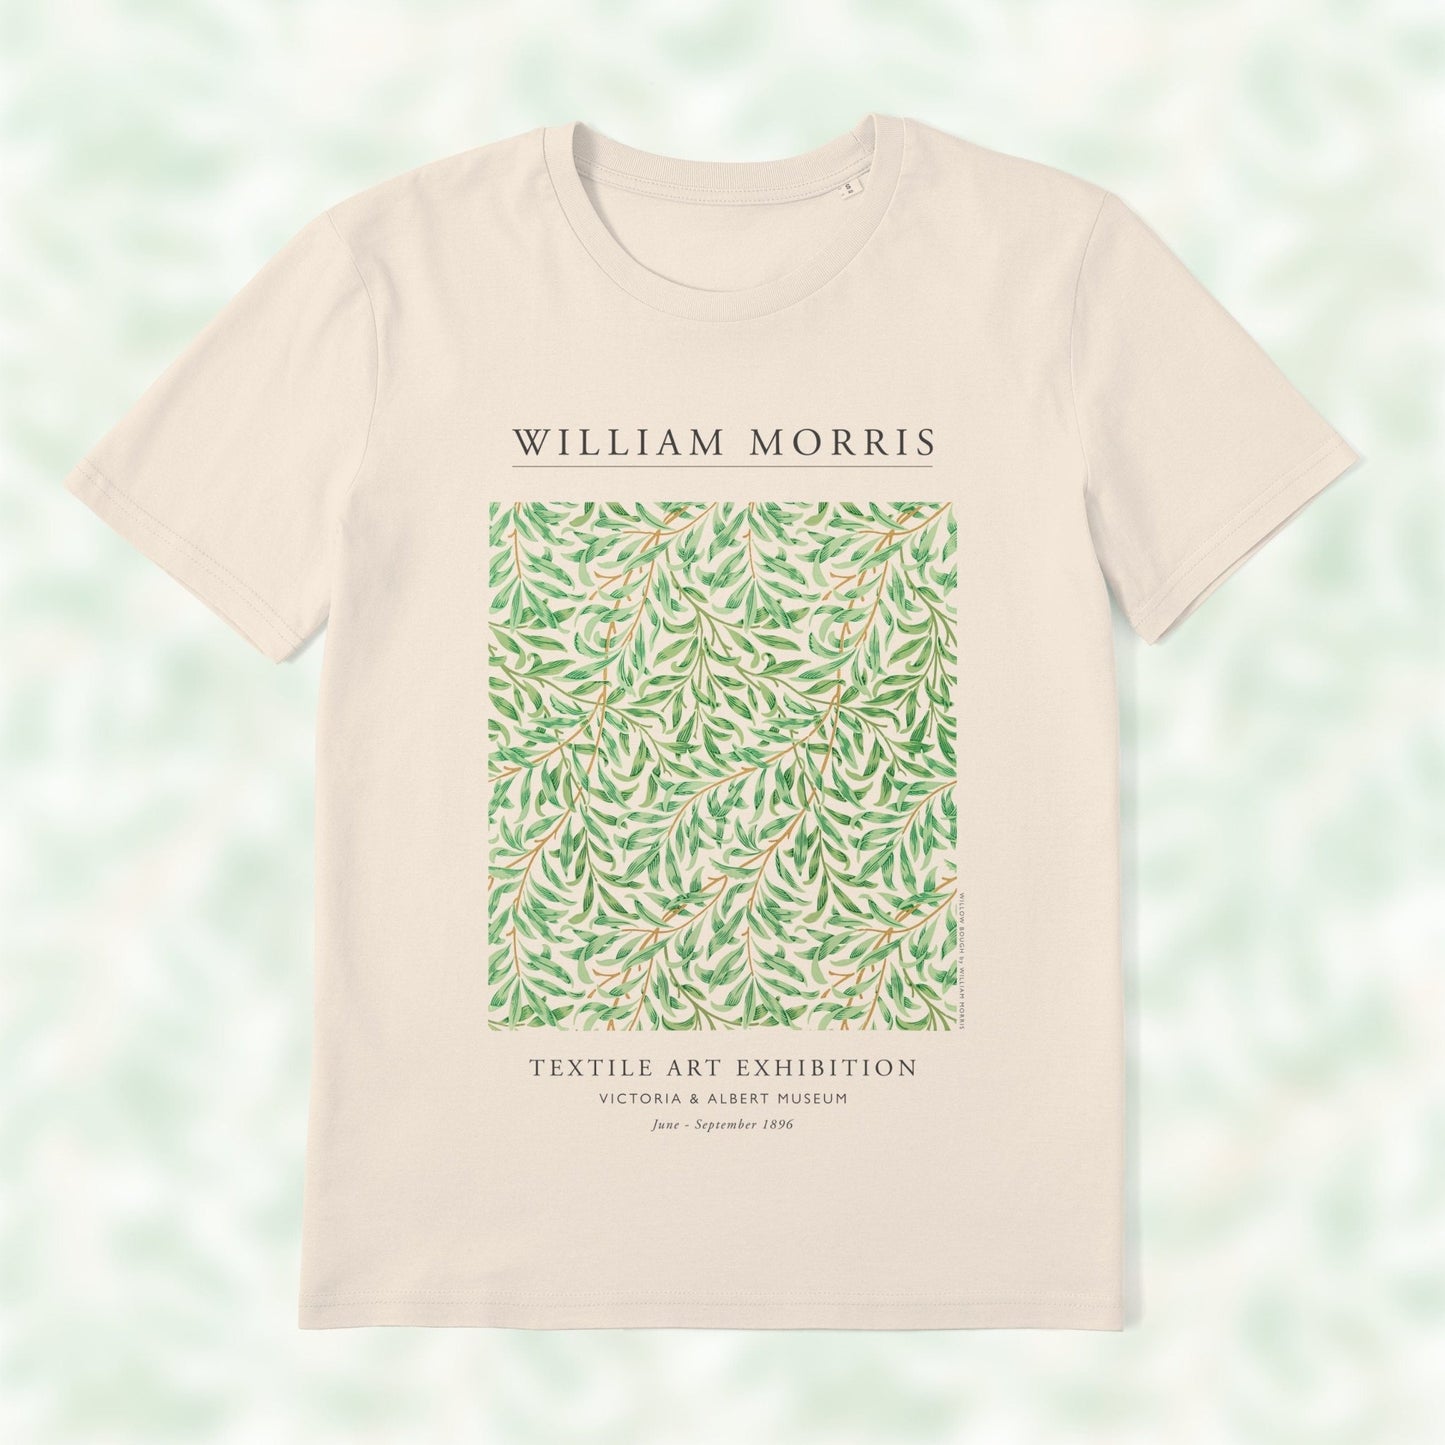 WILLIAM MORRIS - Willow Bough Exhibition T-Shirt